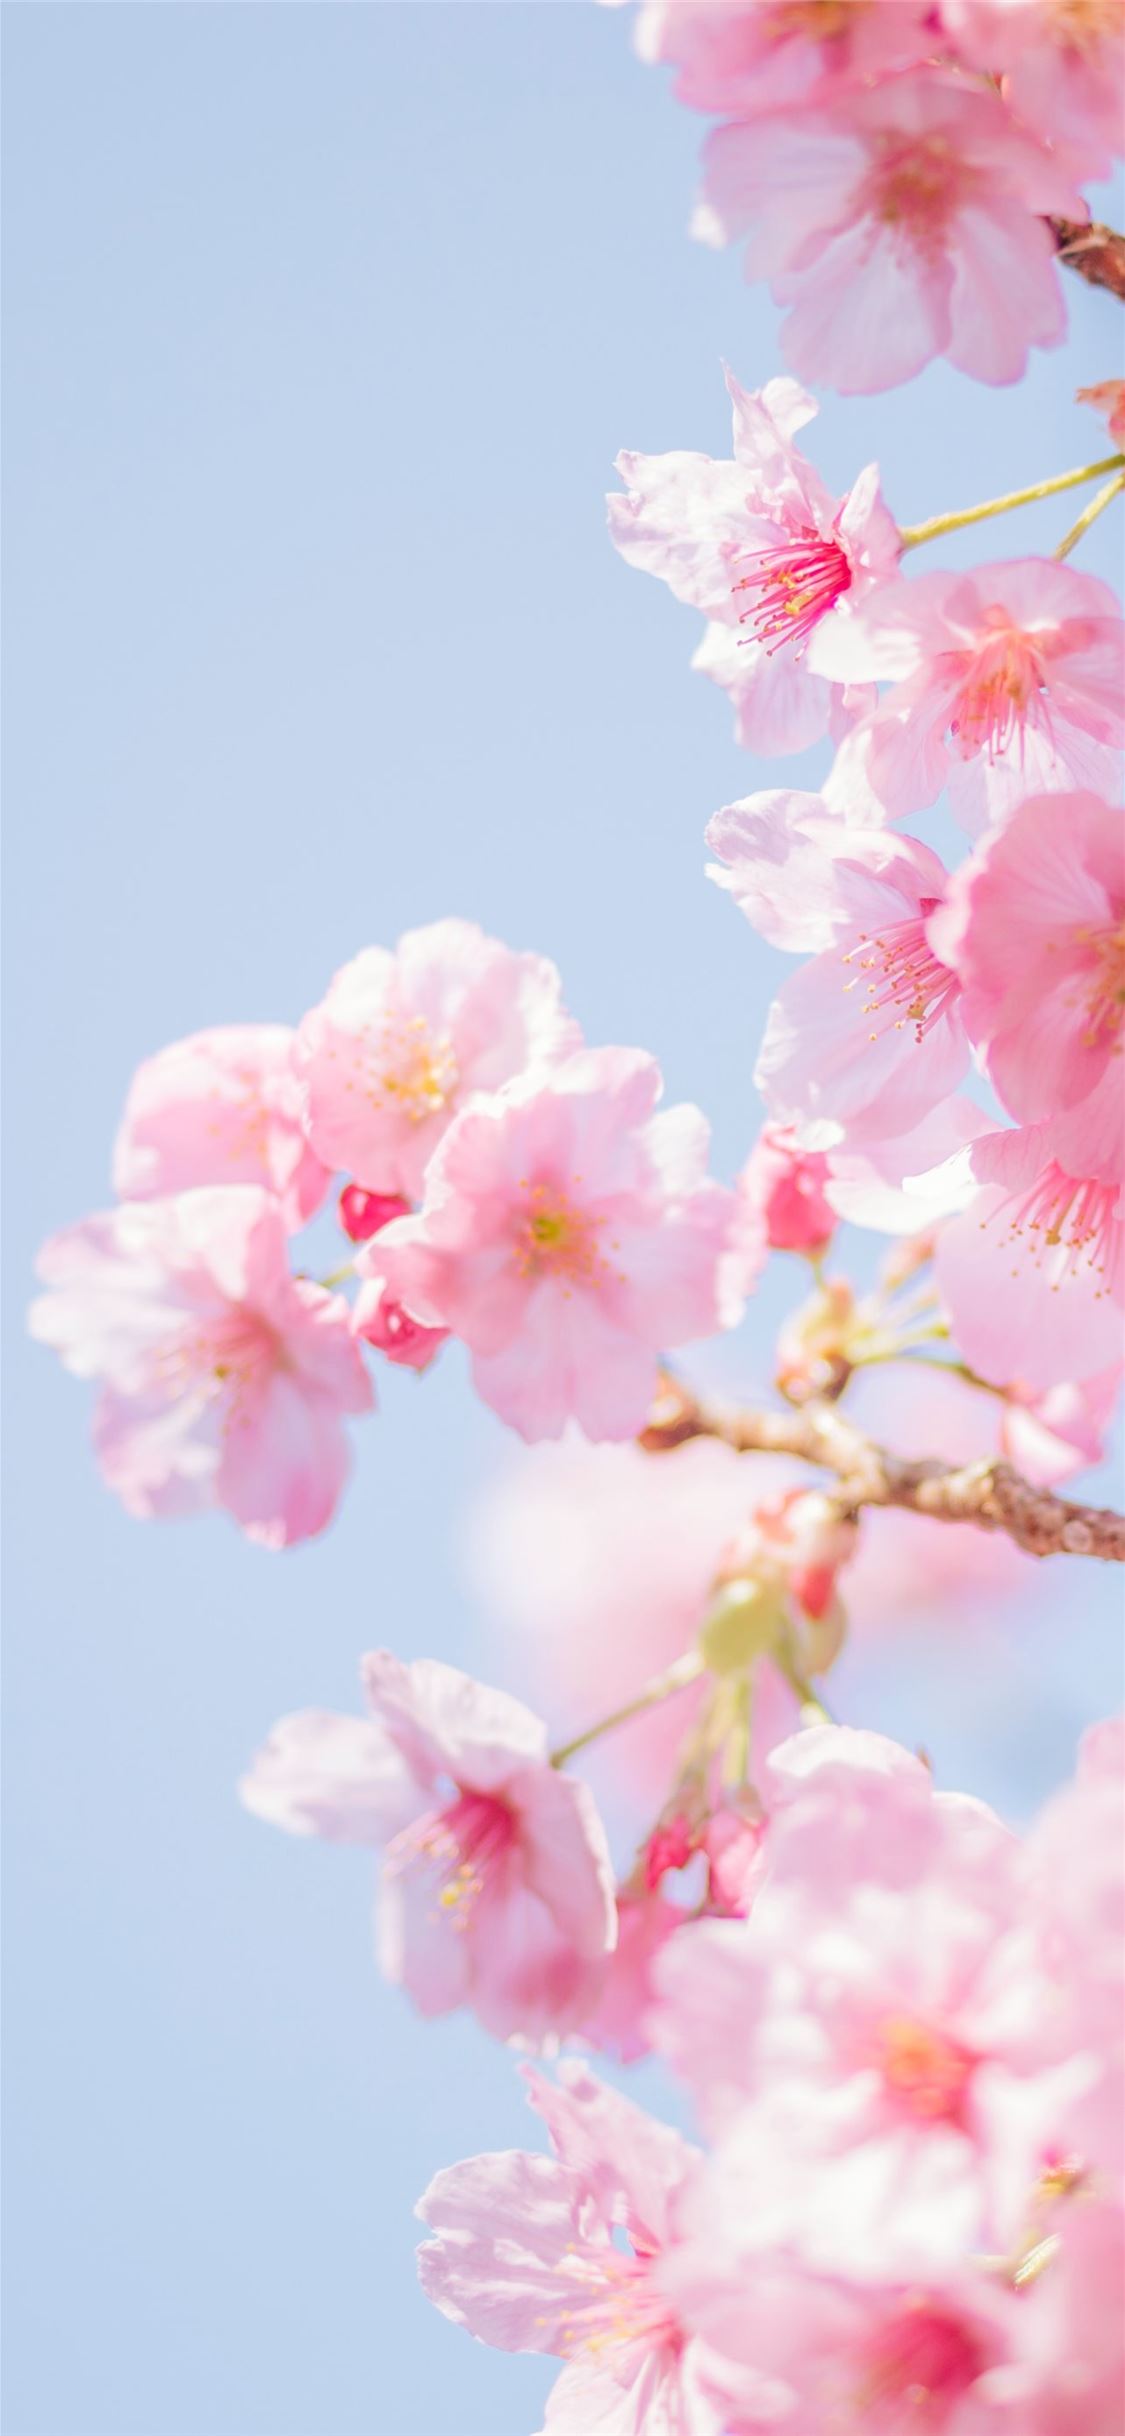 Pink Sakura Flower Pictures  Download Free Images on Unsplash